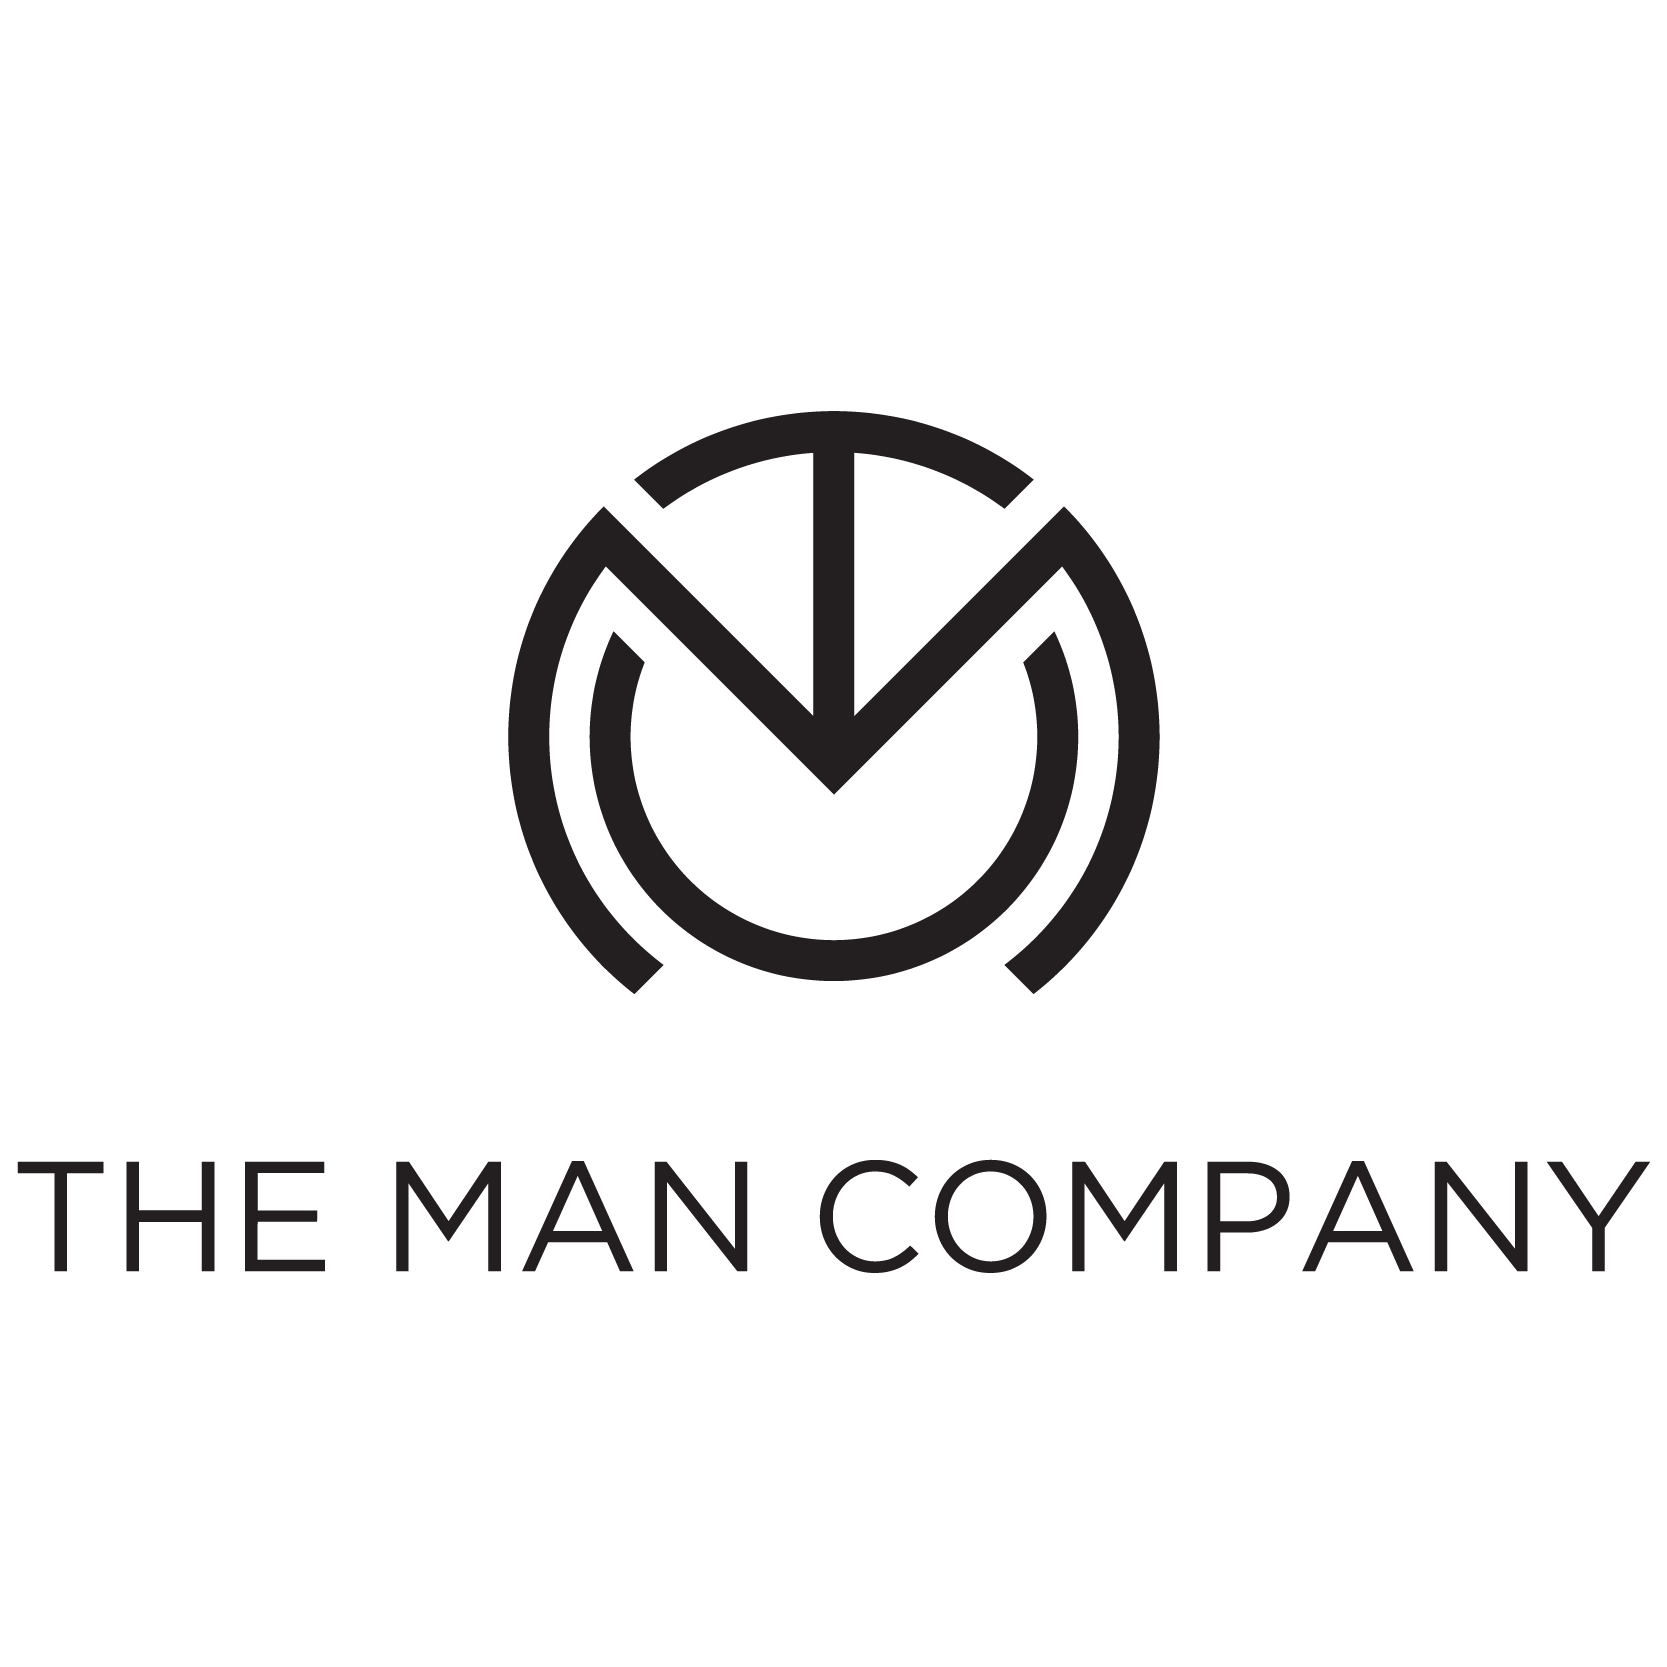 The man Company логотип. Логотип in. Лимбус Компани логотип. Pressman логотип.